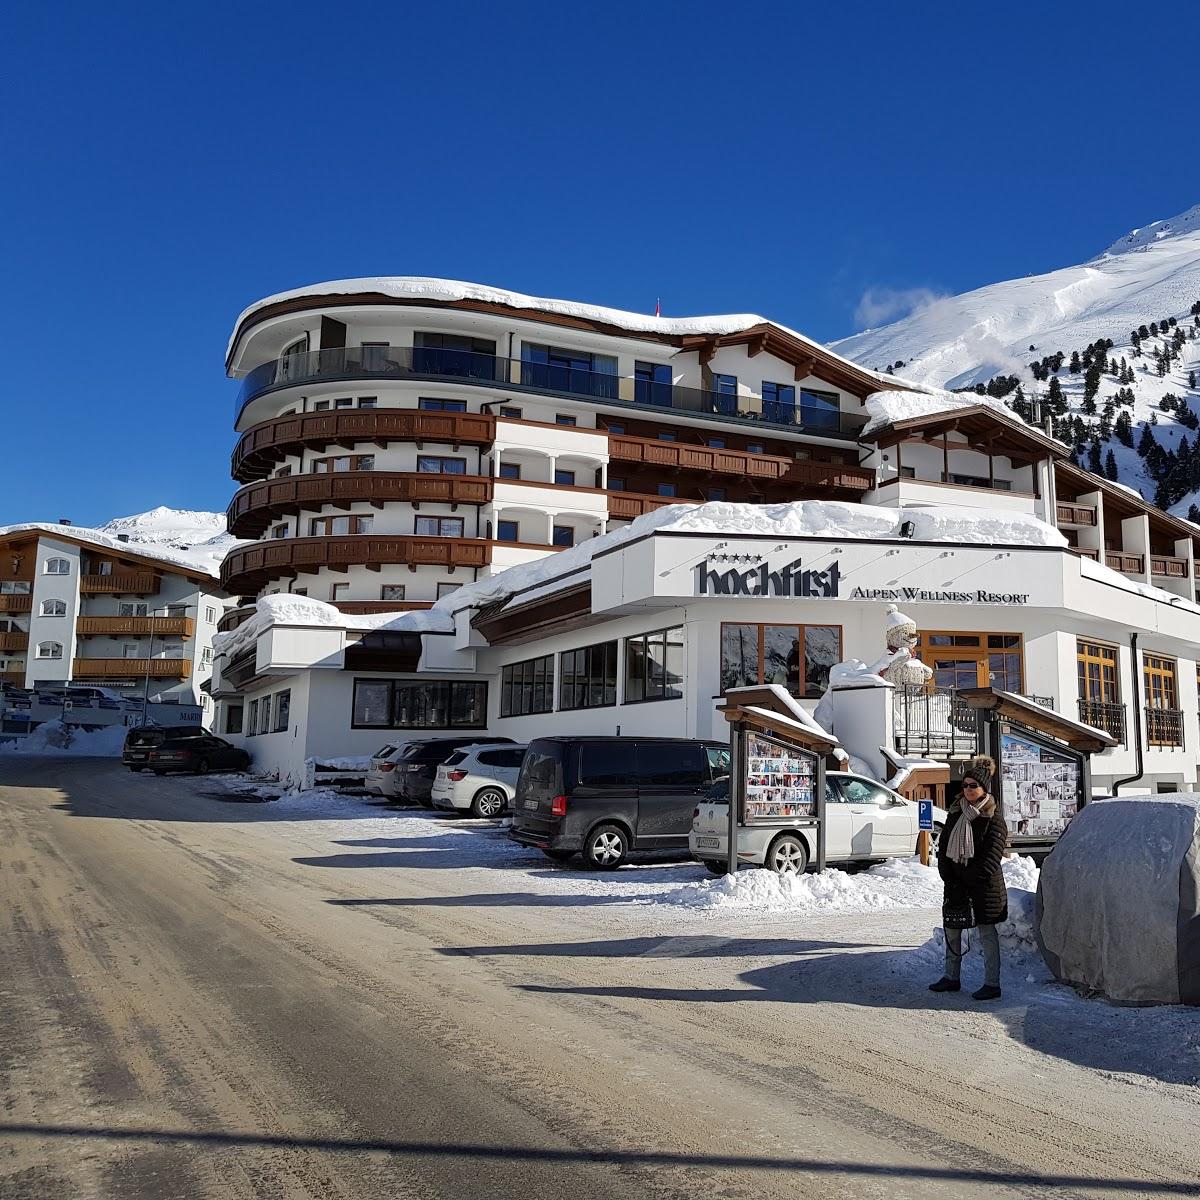 Restaurant "Alpen-Wellness Resort Hotel Hochfirst" in Obergurgl